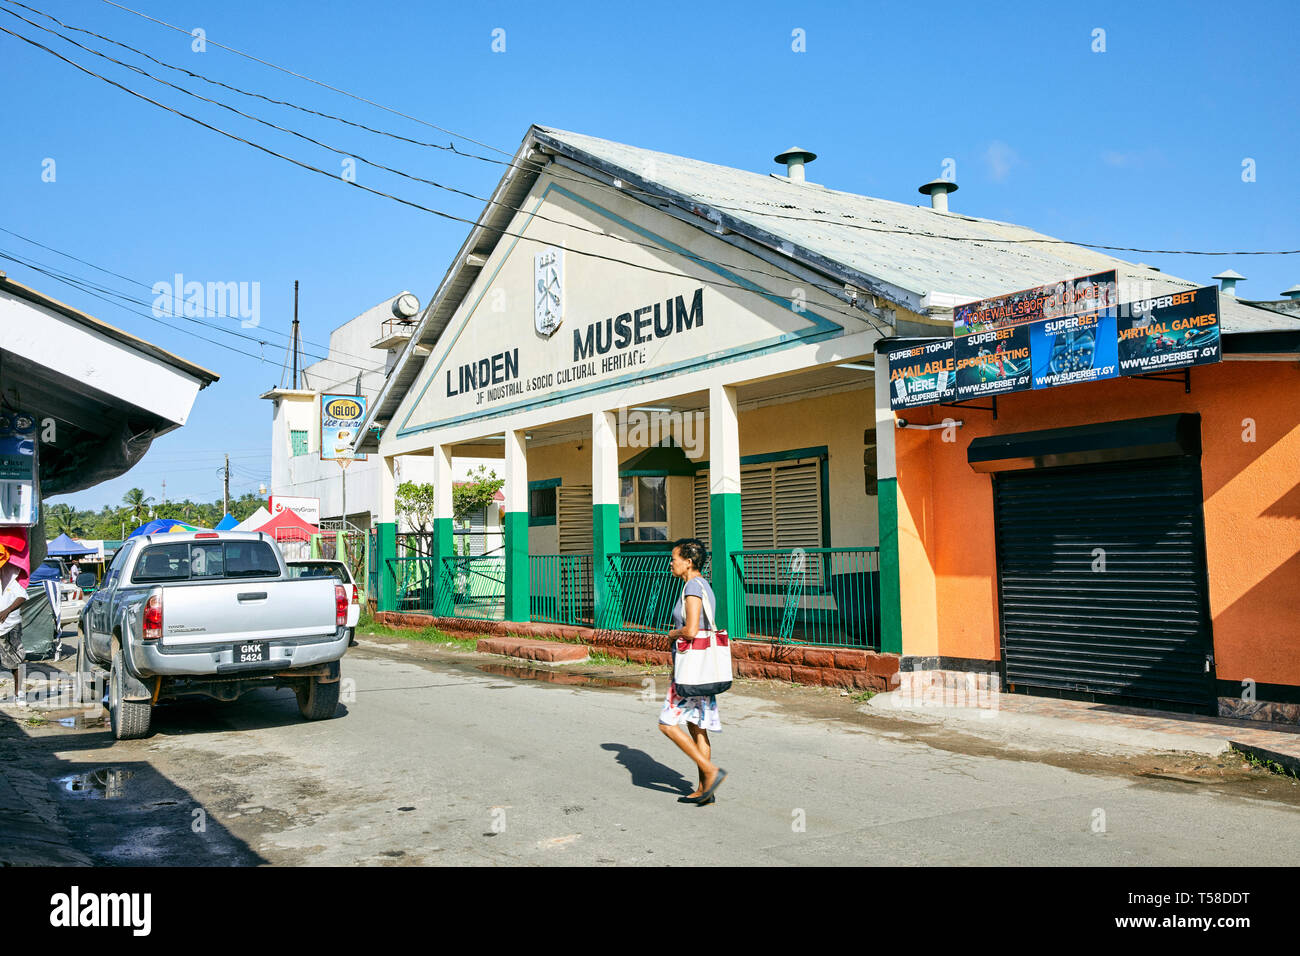 Linden Museum für Industrie- & Sozio kulturellen Erbes in Linden Guyana Südamerika Stockfoto